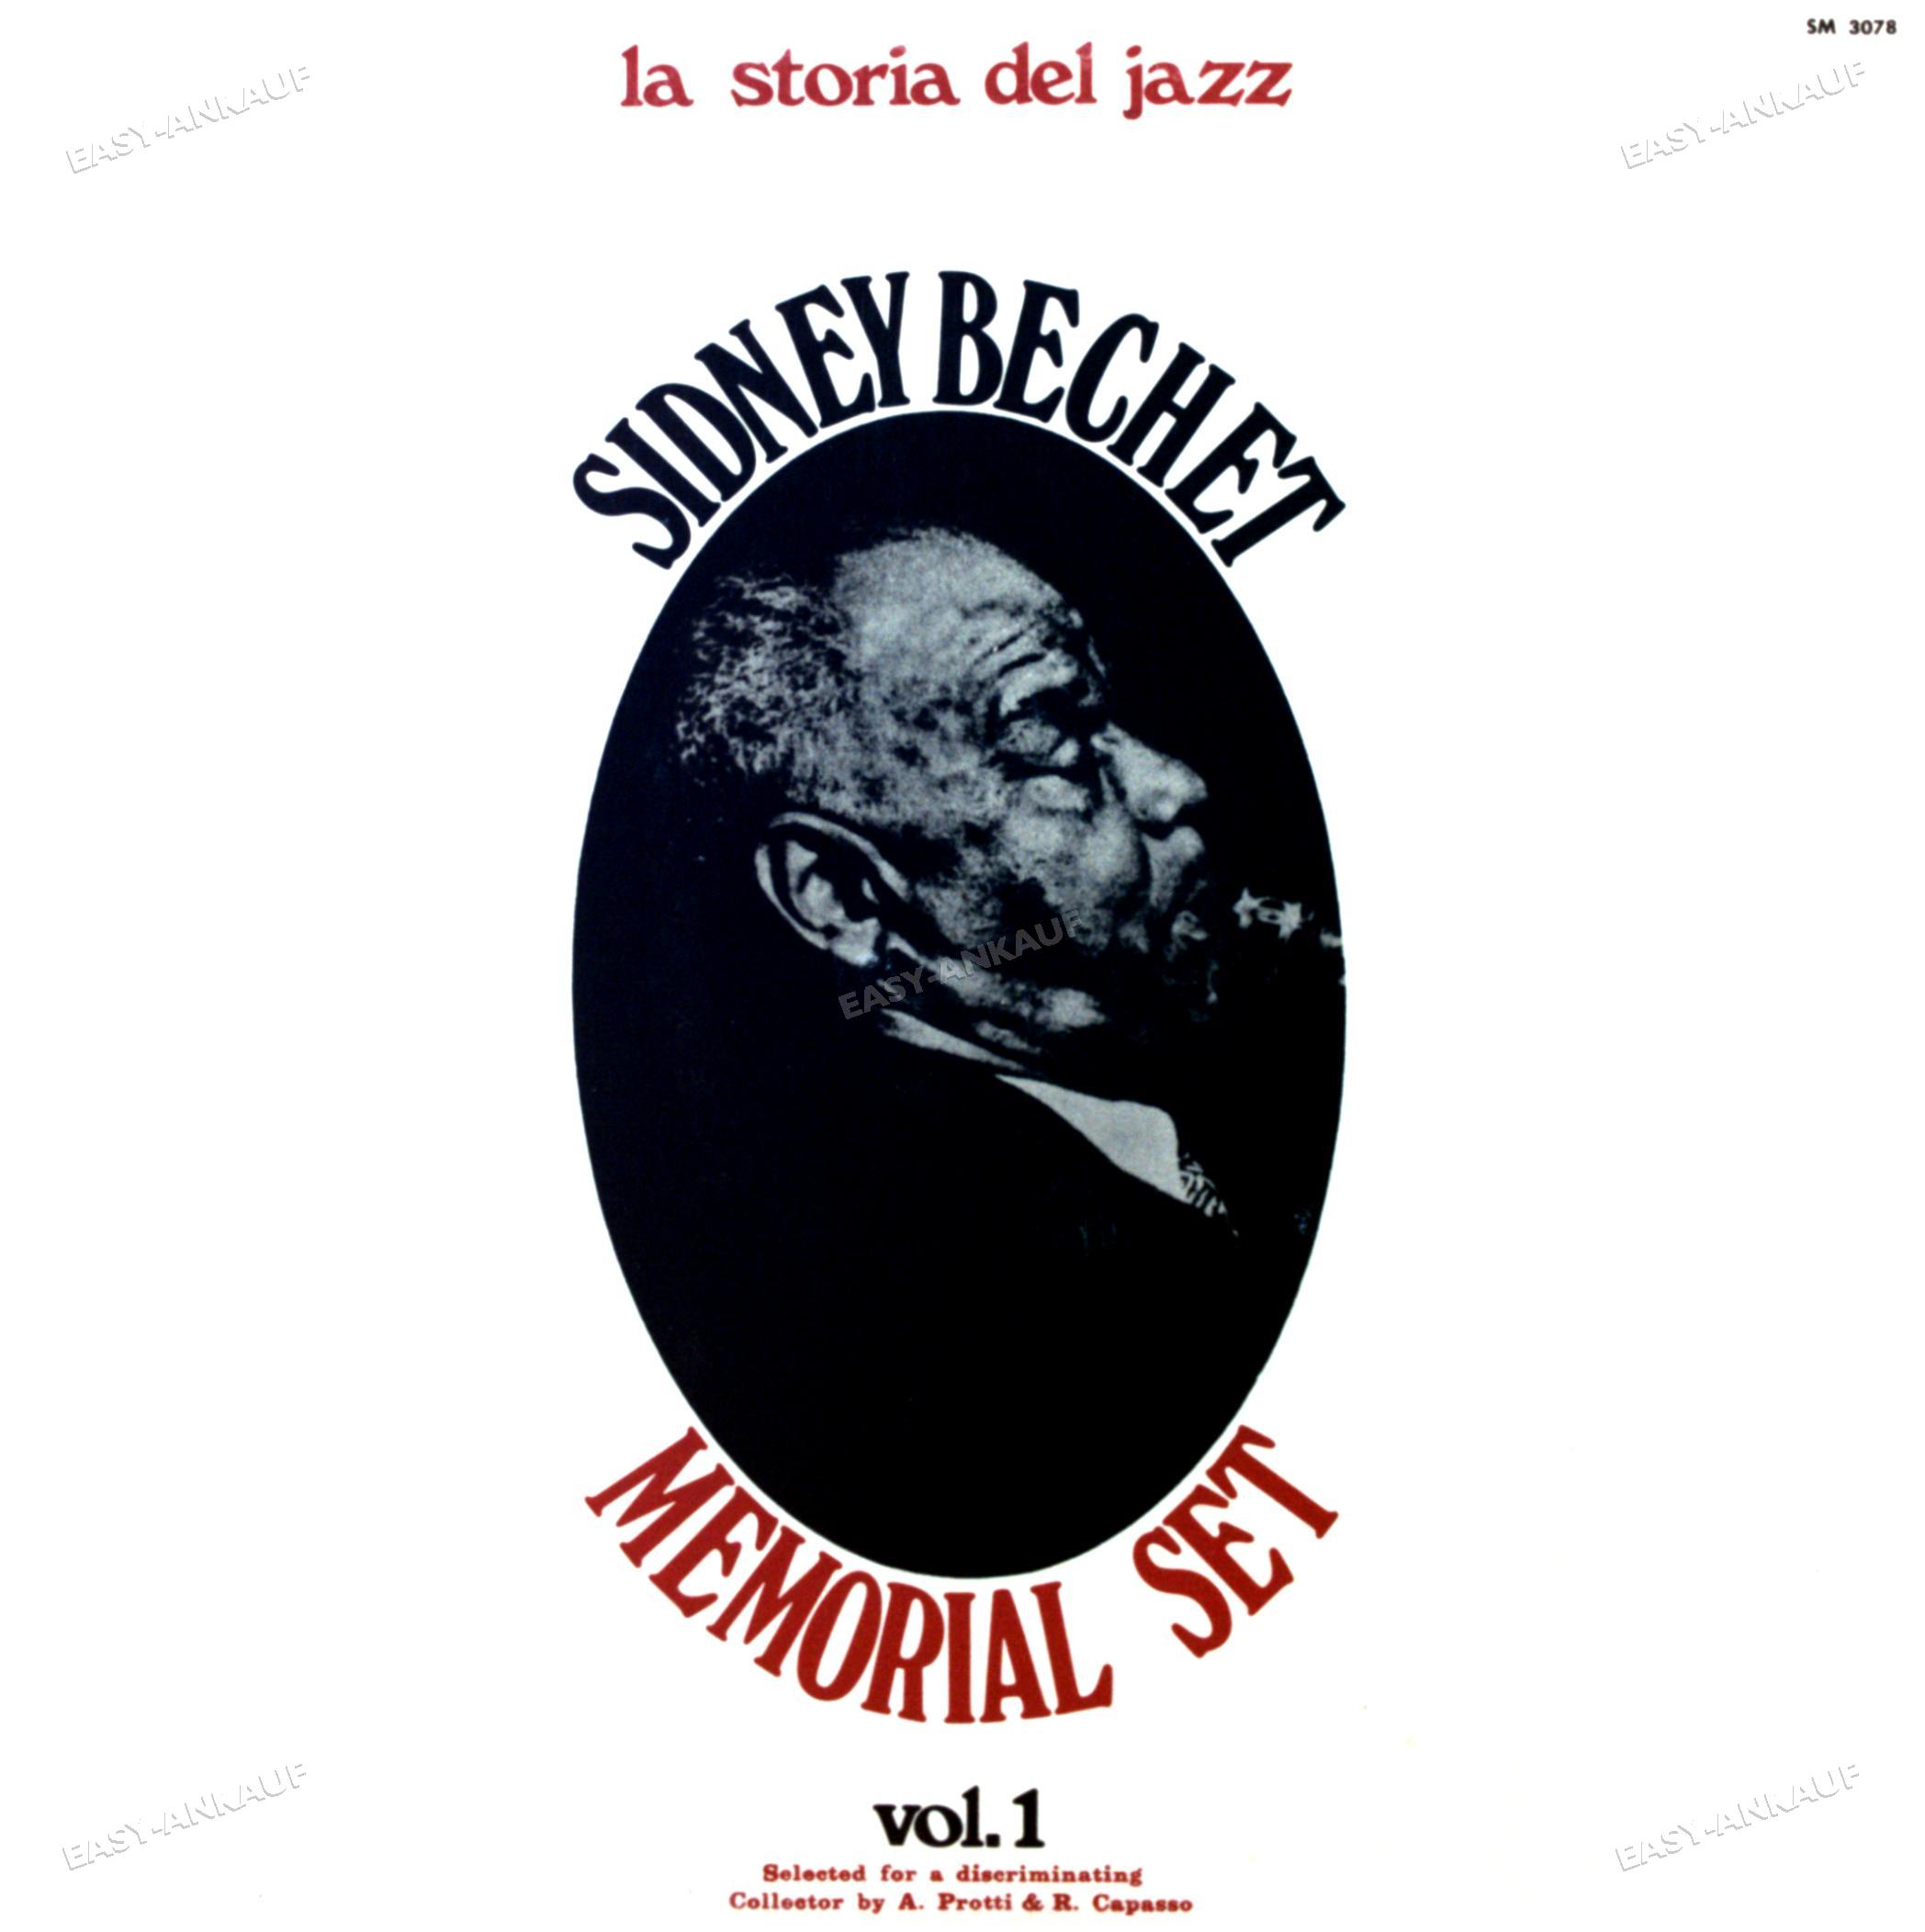 Sidney Bechet - Memorial Set Vol. 1 LP 1971 (VG+/VG+) '* - Picture 1 of 1